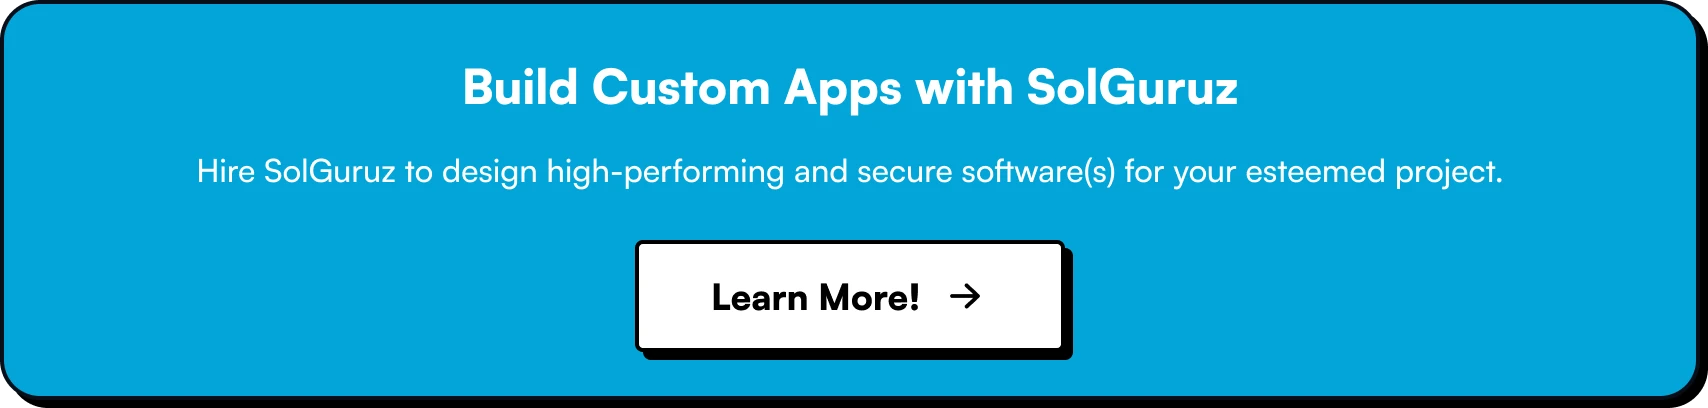 Build Custom Apps with SolGuruz. Hire SolGuruz to design high-performing and secure software(s) for your esteemed project.